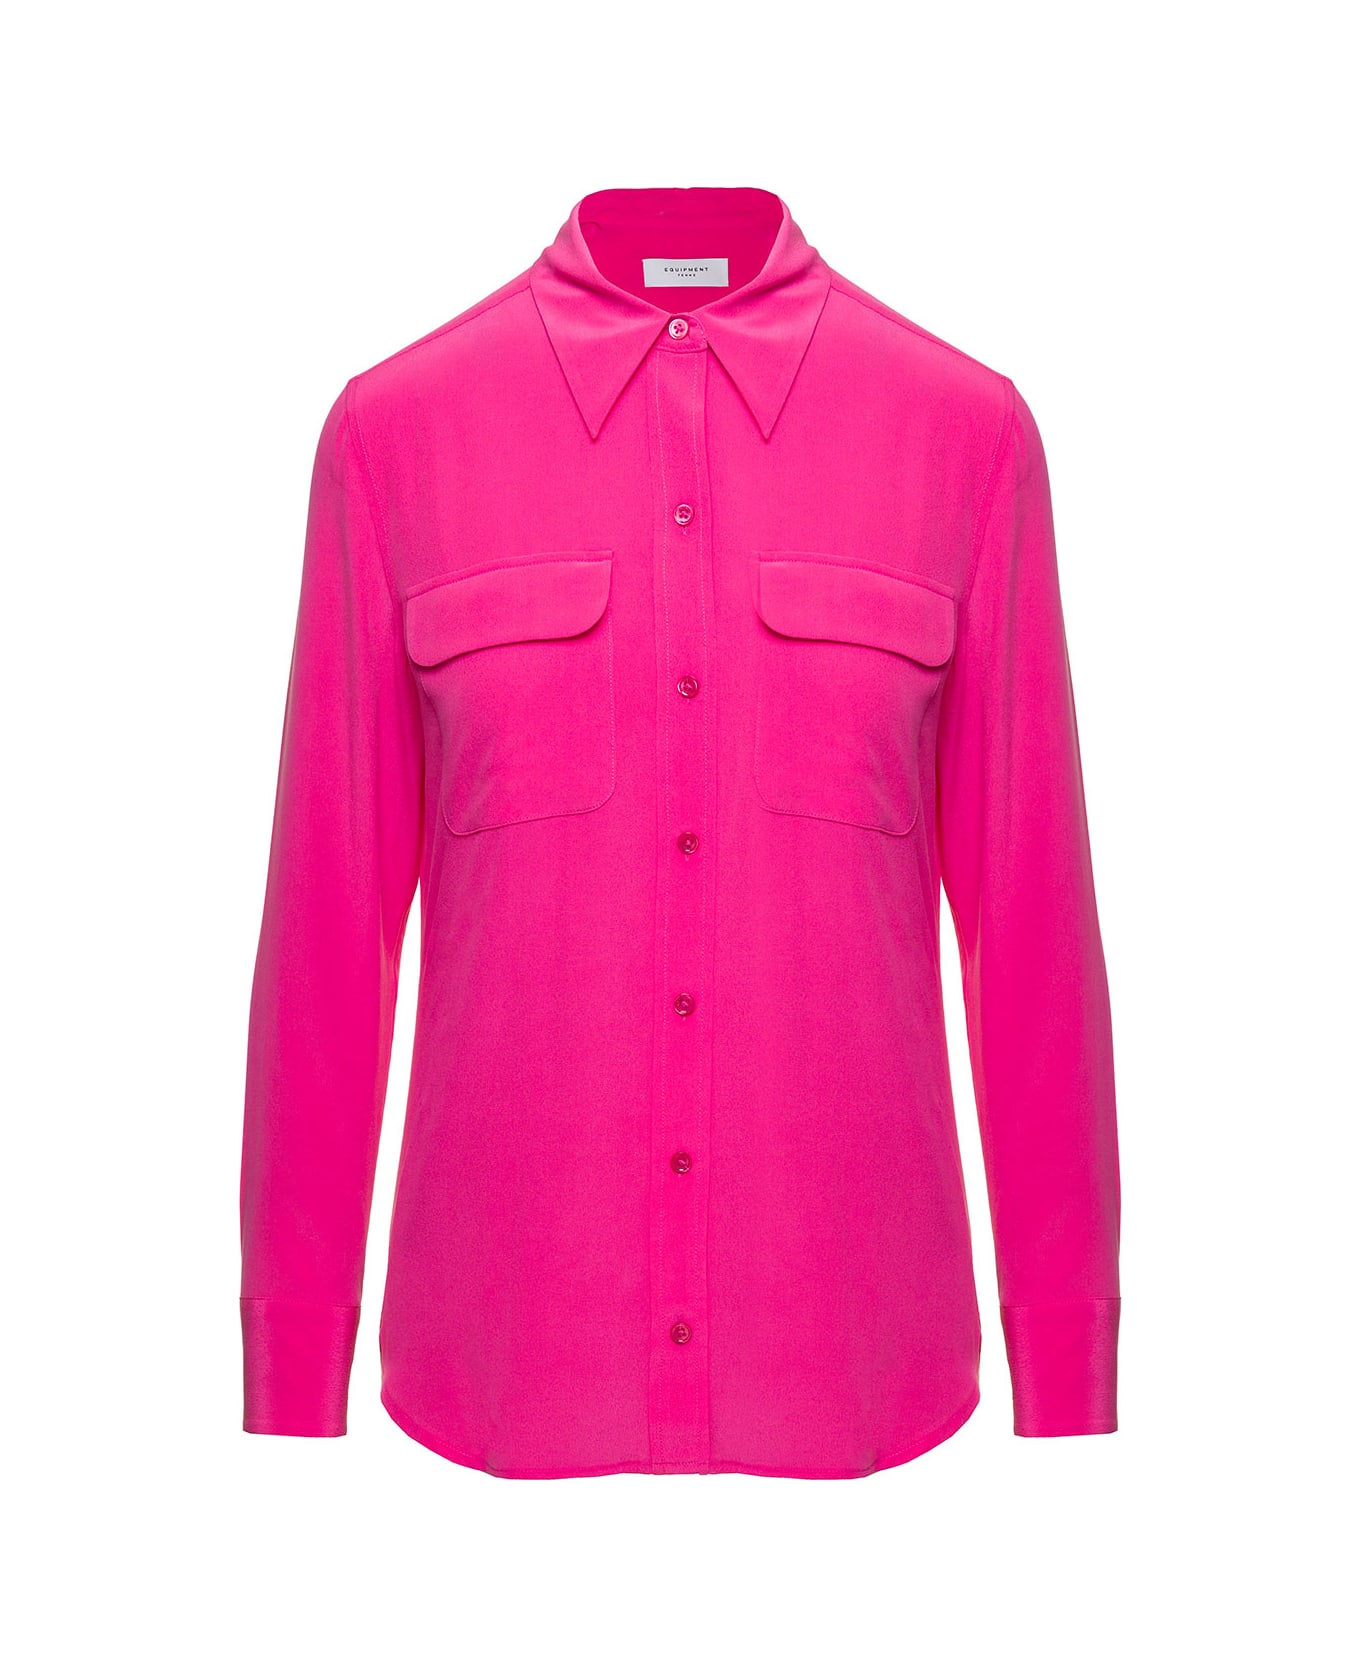 Equipment 'slim Signature' Fuchsia Long Sleeve Shirt With Pockets In Silk Woman - Raspberry Sorbet